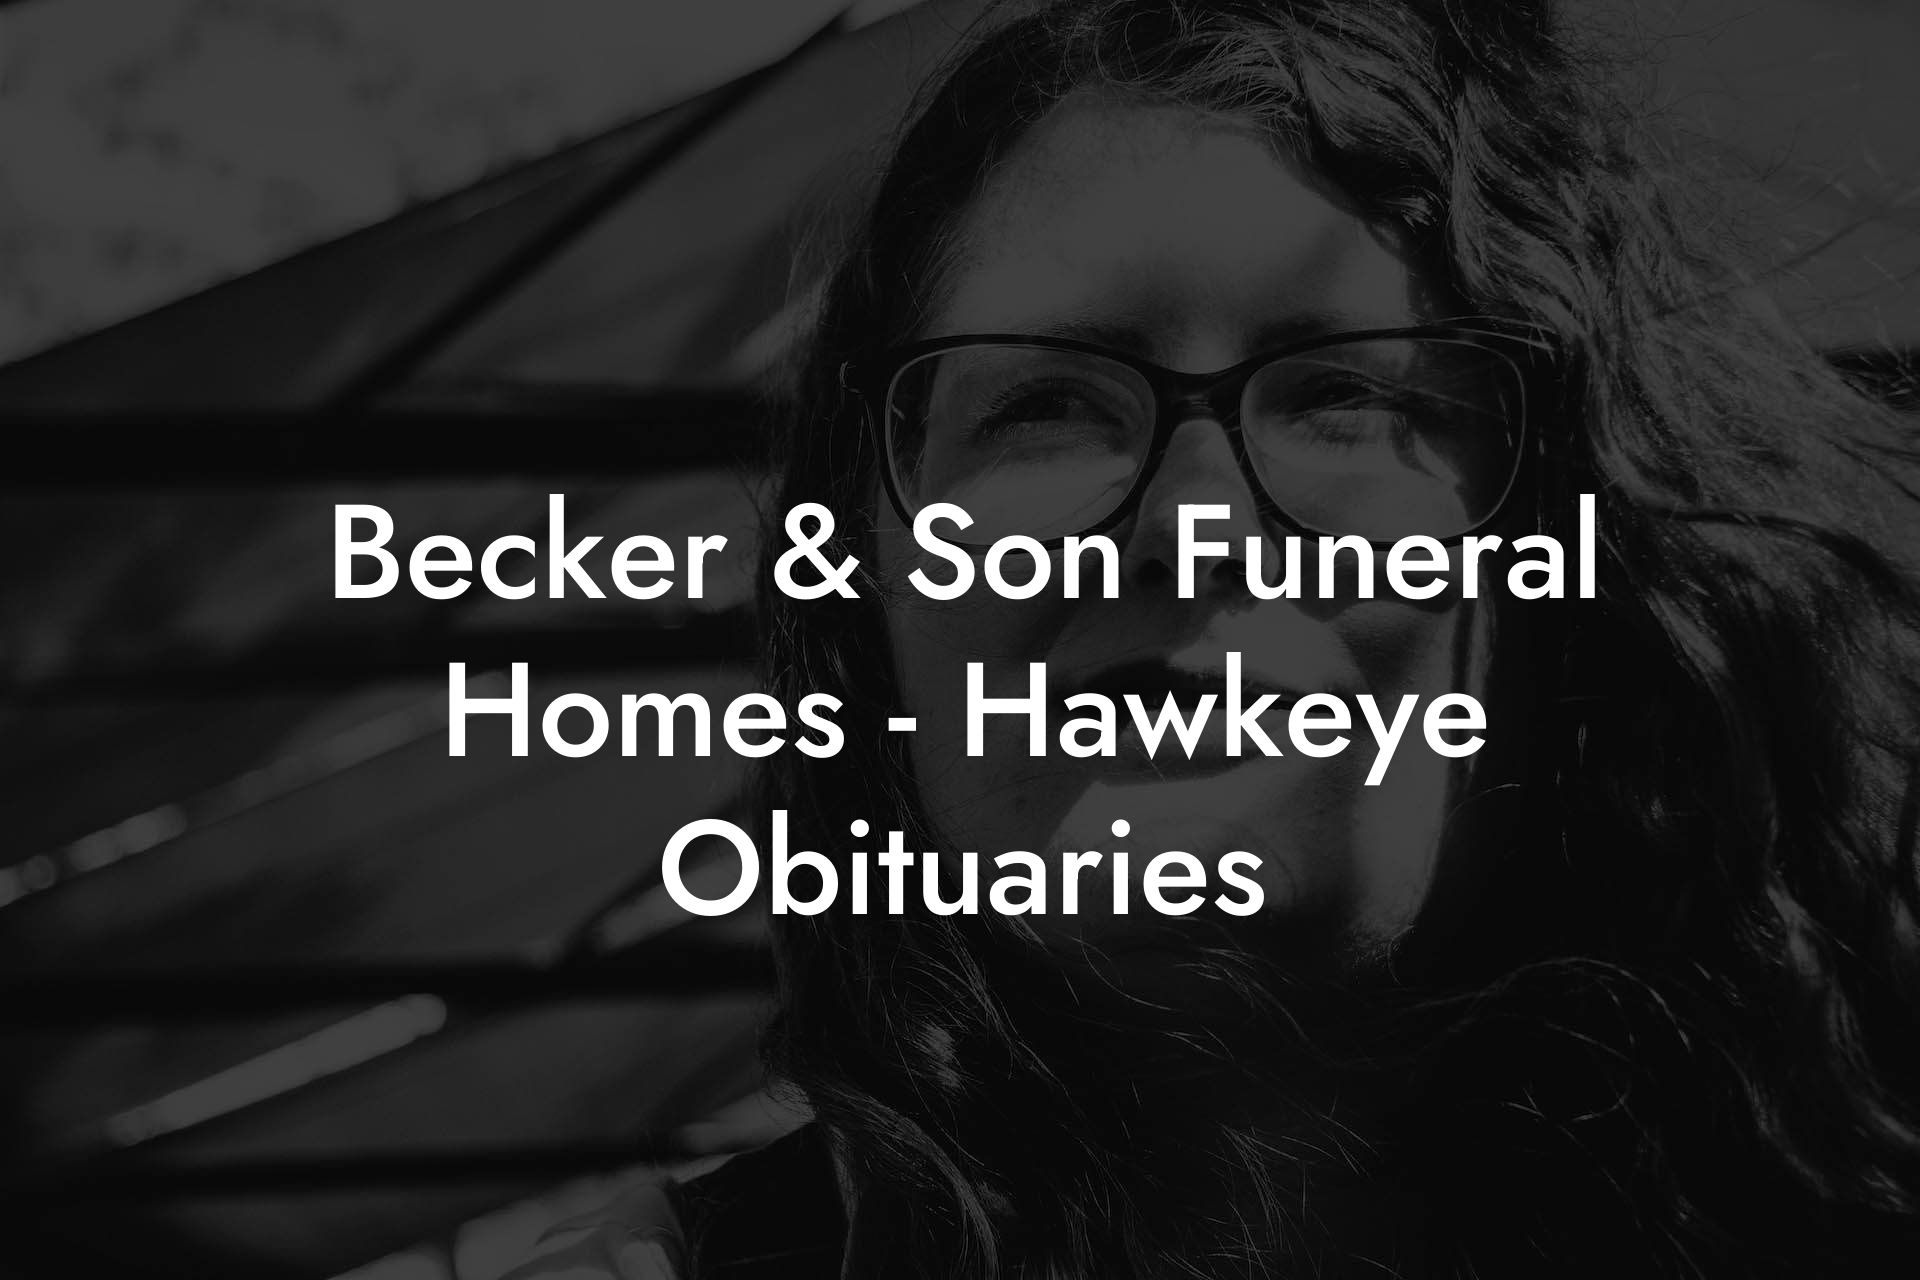 Becker & Son Funeral Homes - Hawkeye Obituaries